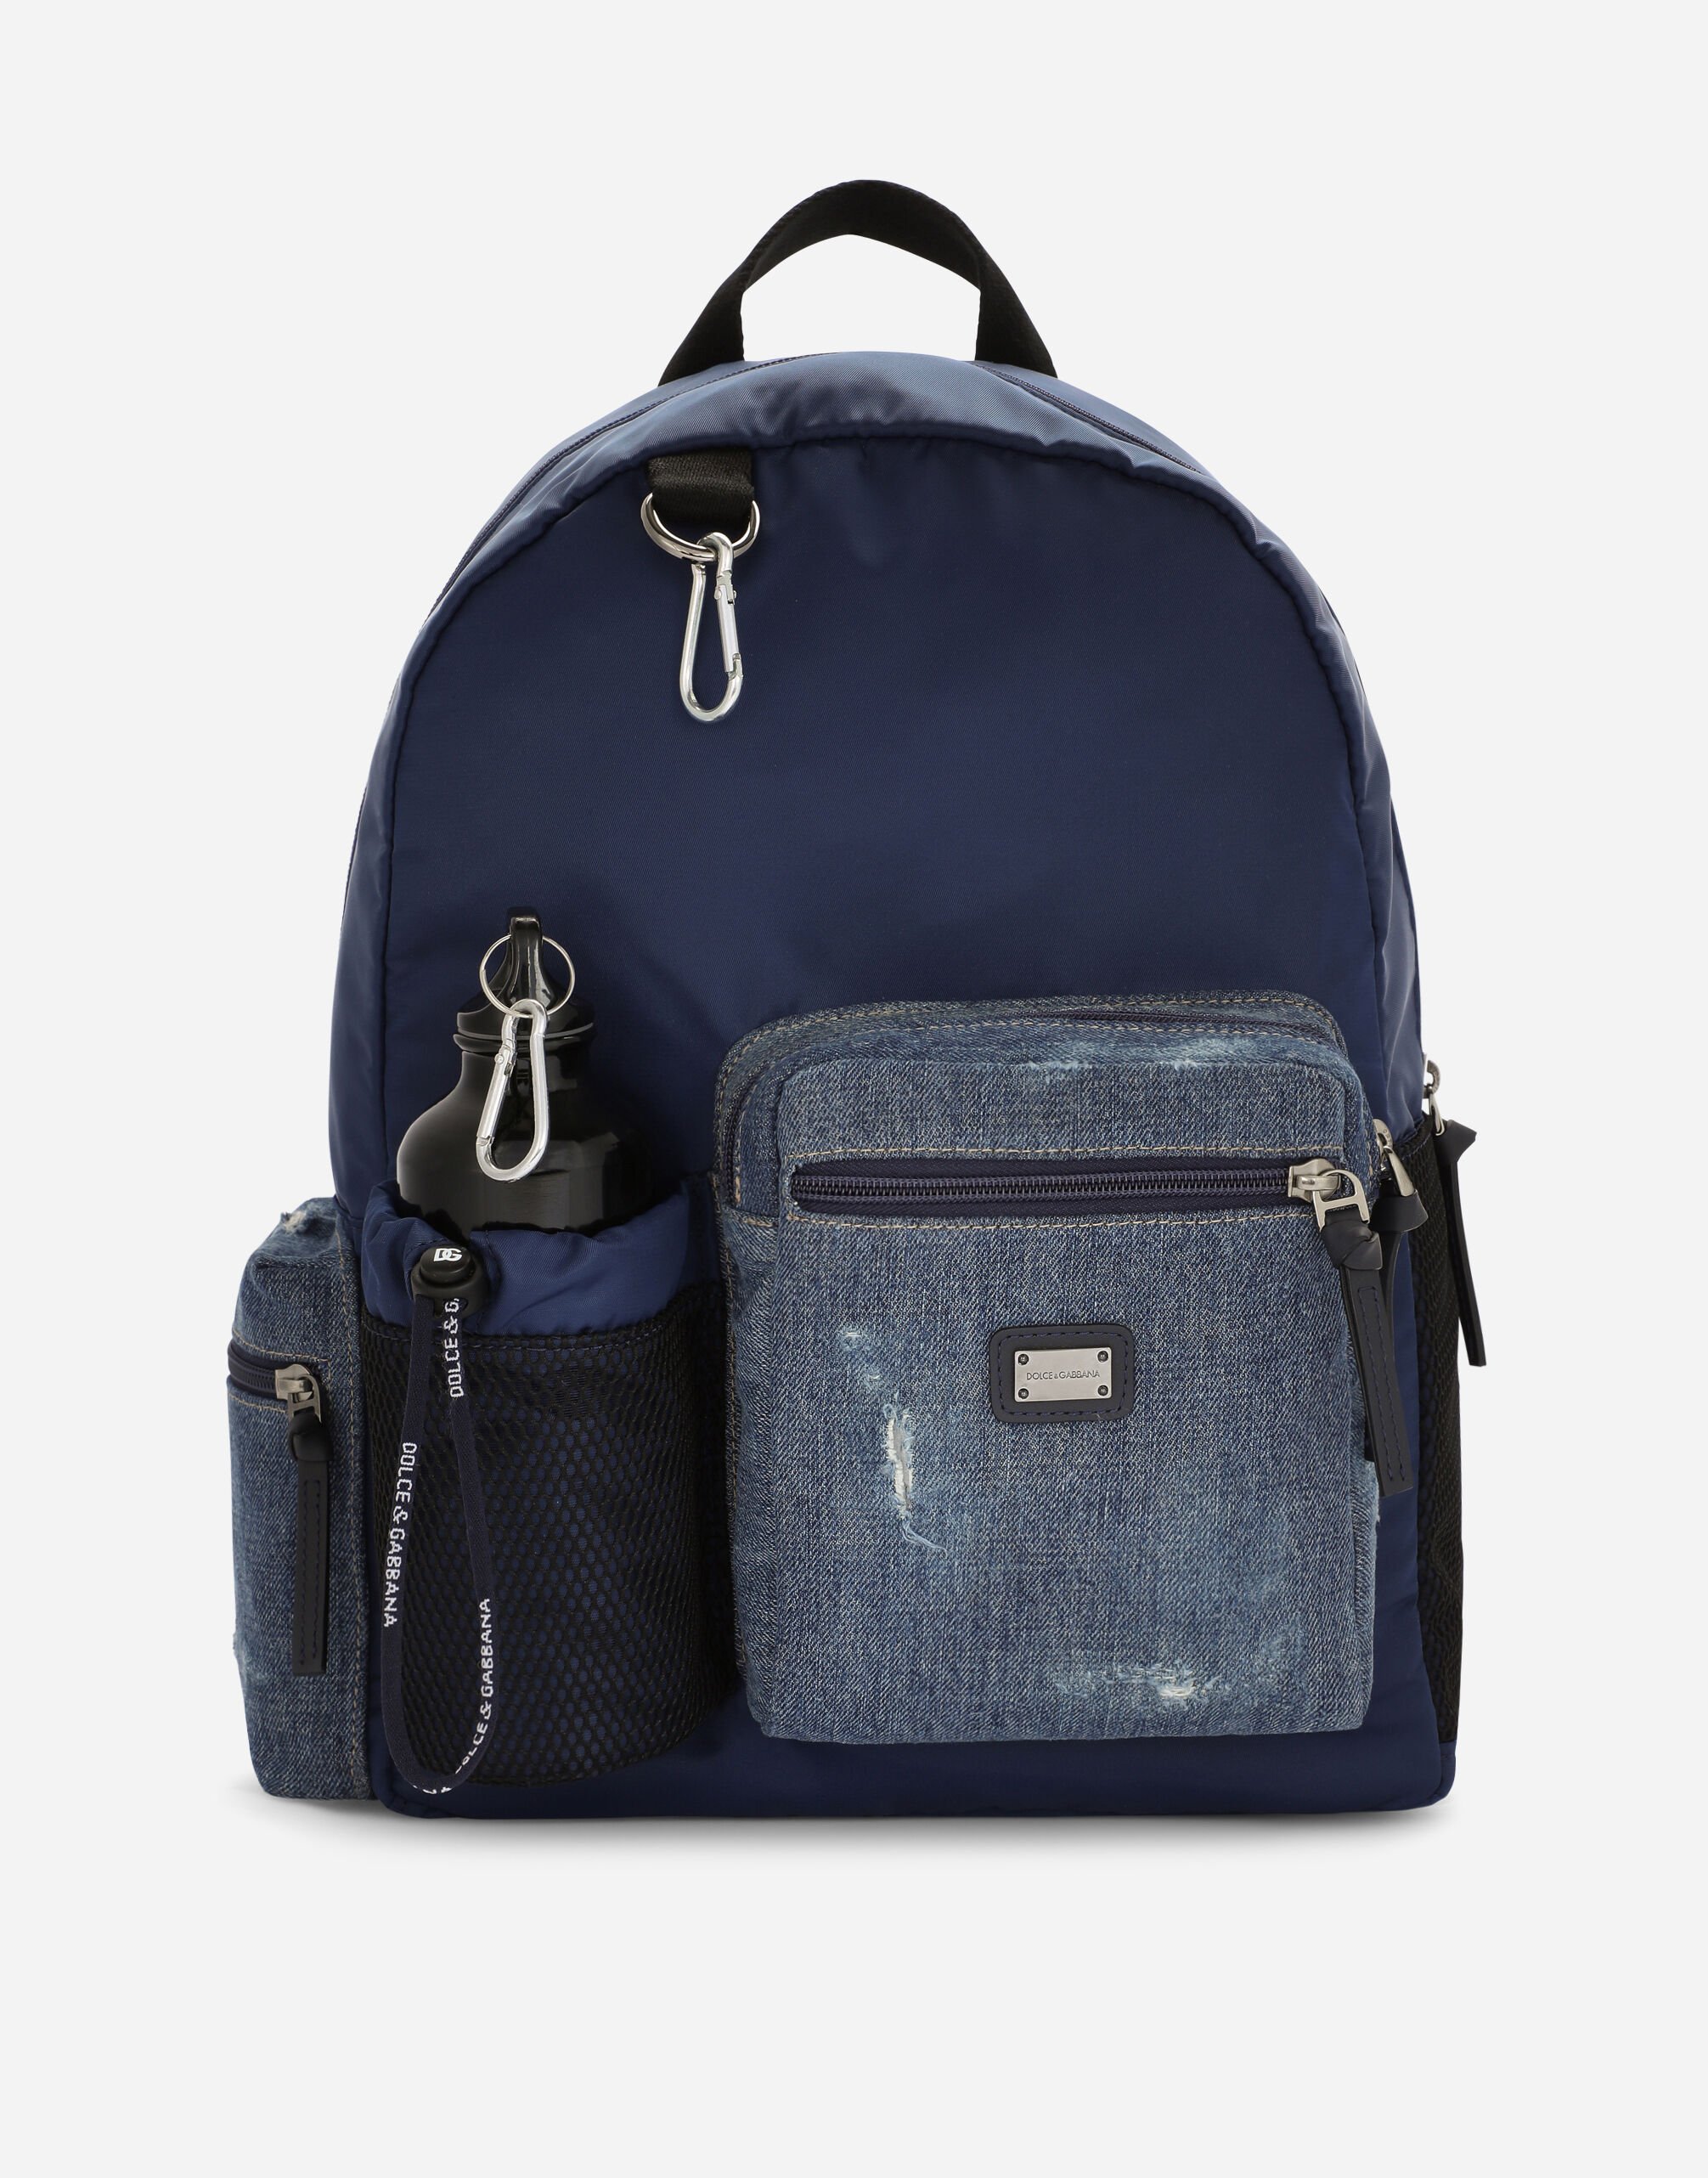 Dolce & Gabbana Denim and nylon backpack with logo tag Multicolor LBKH85JACV2